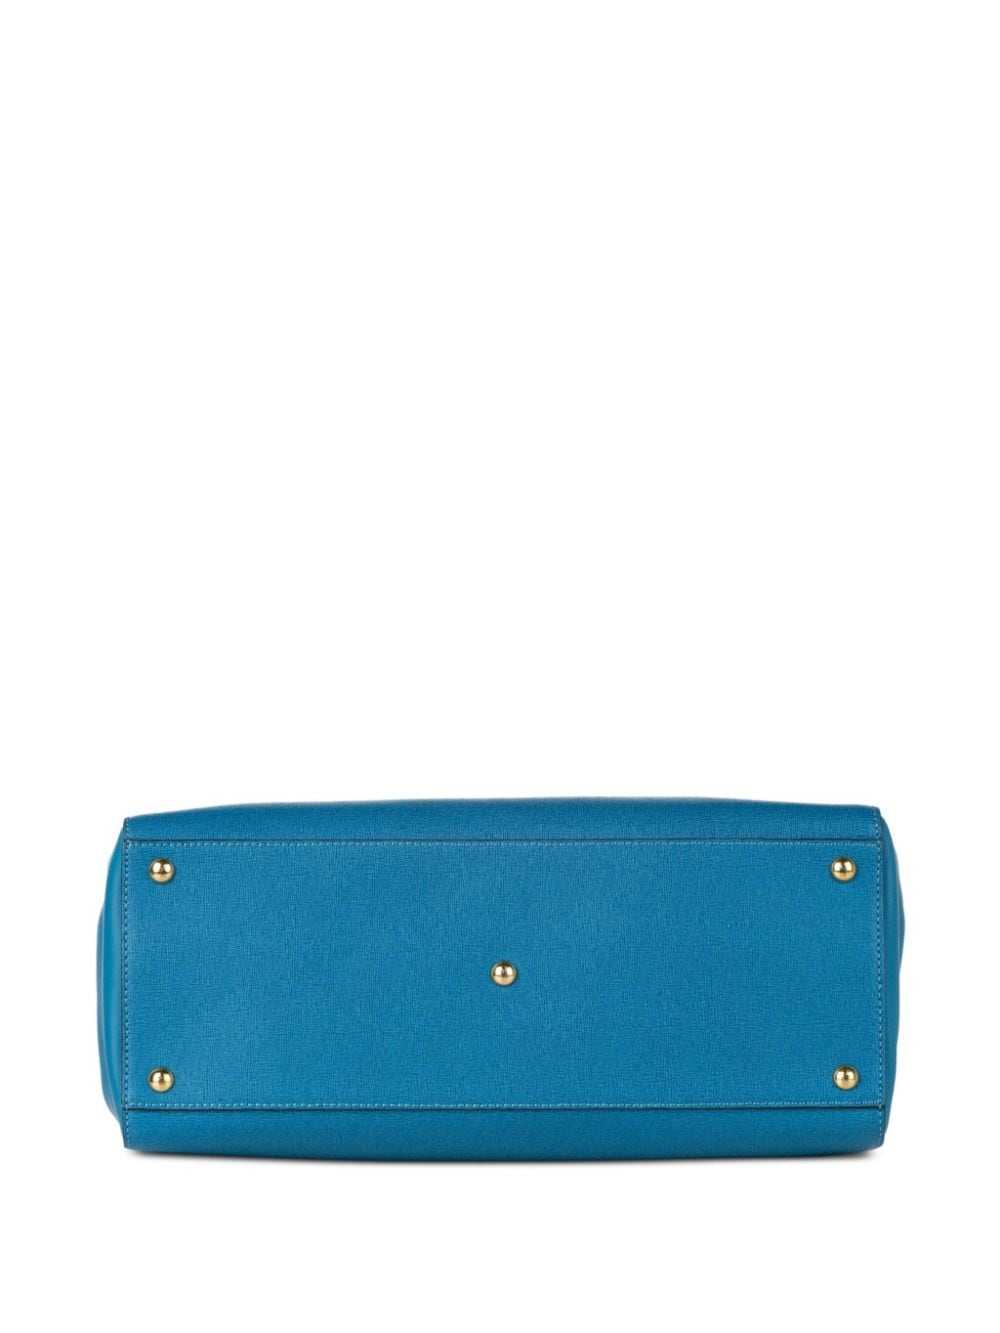 Fendi Pre-Owned 2Jours satchel - Blue - image 4